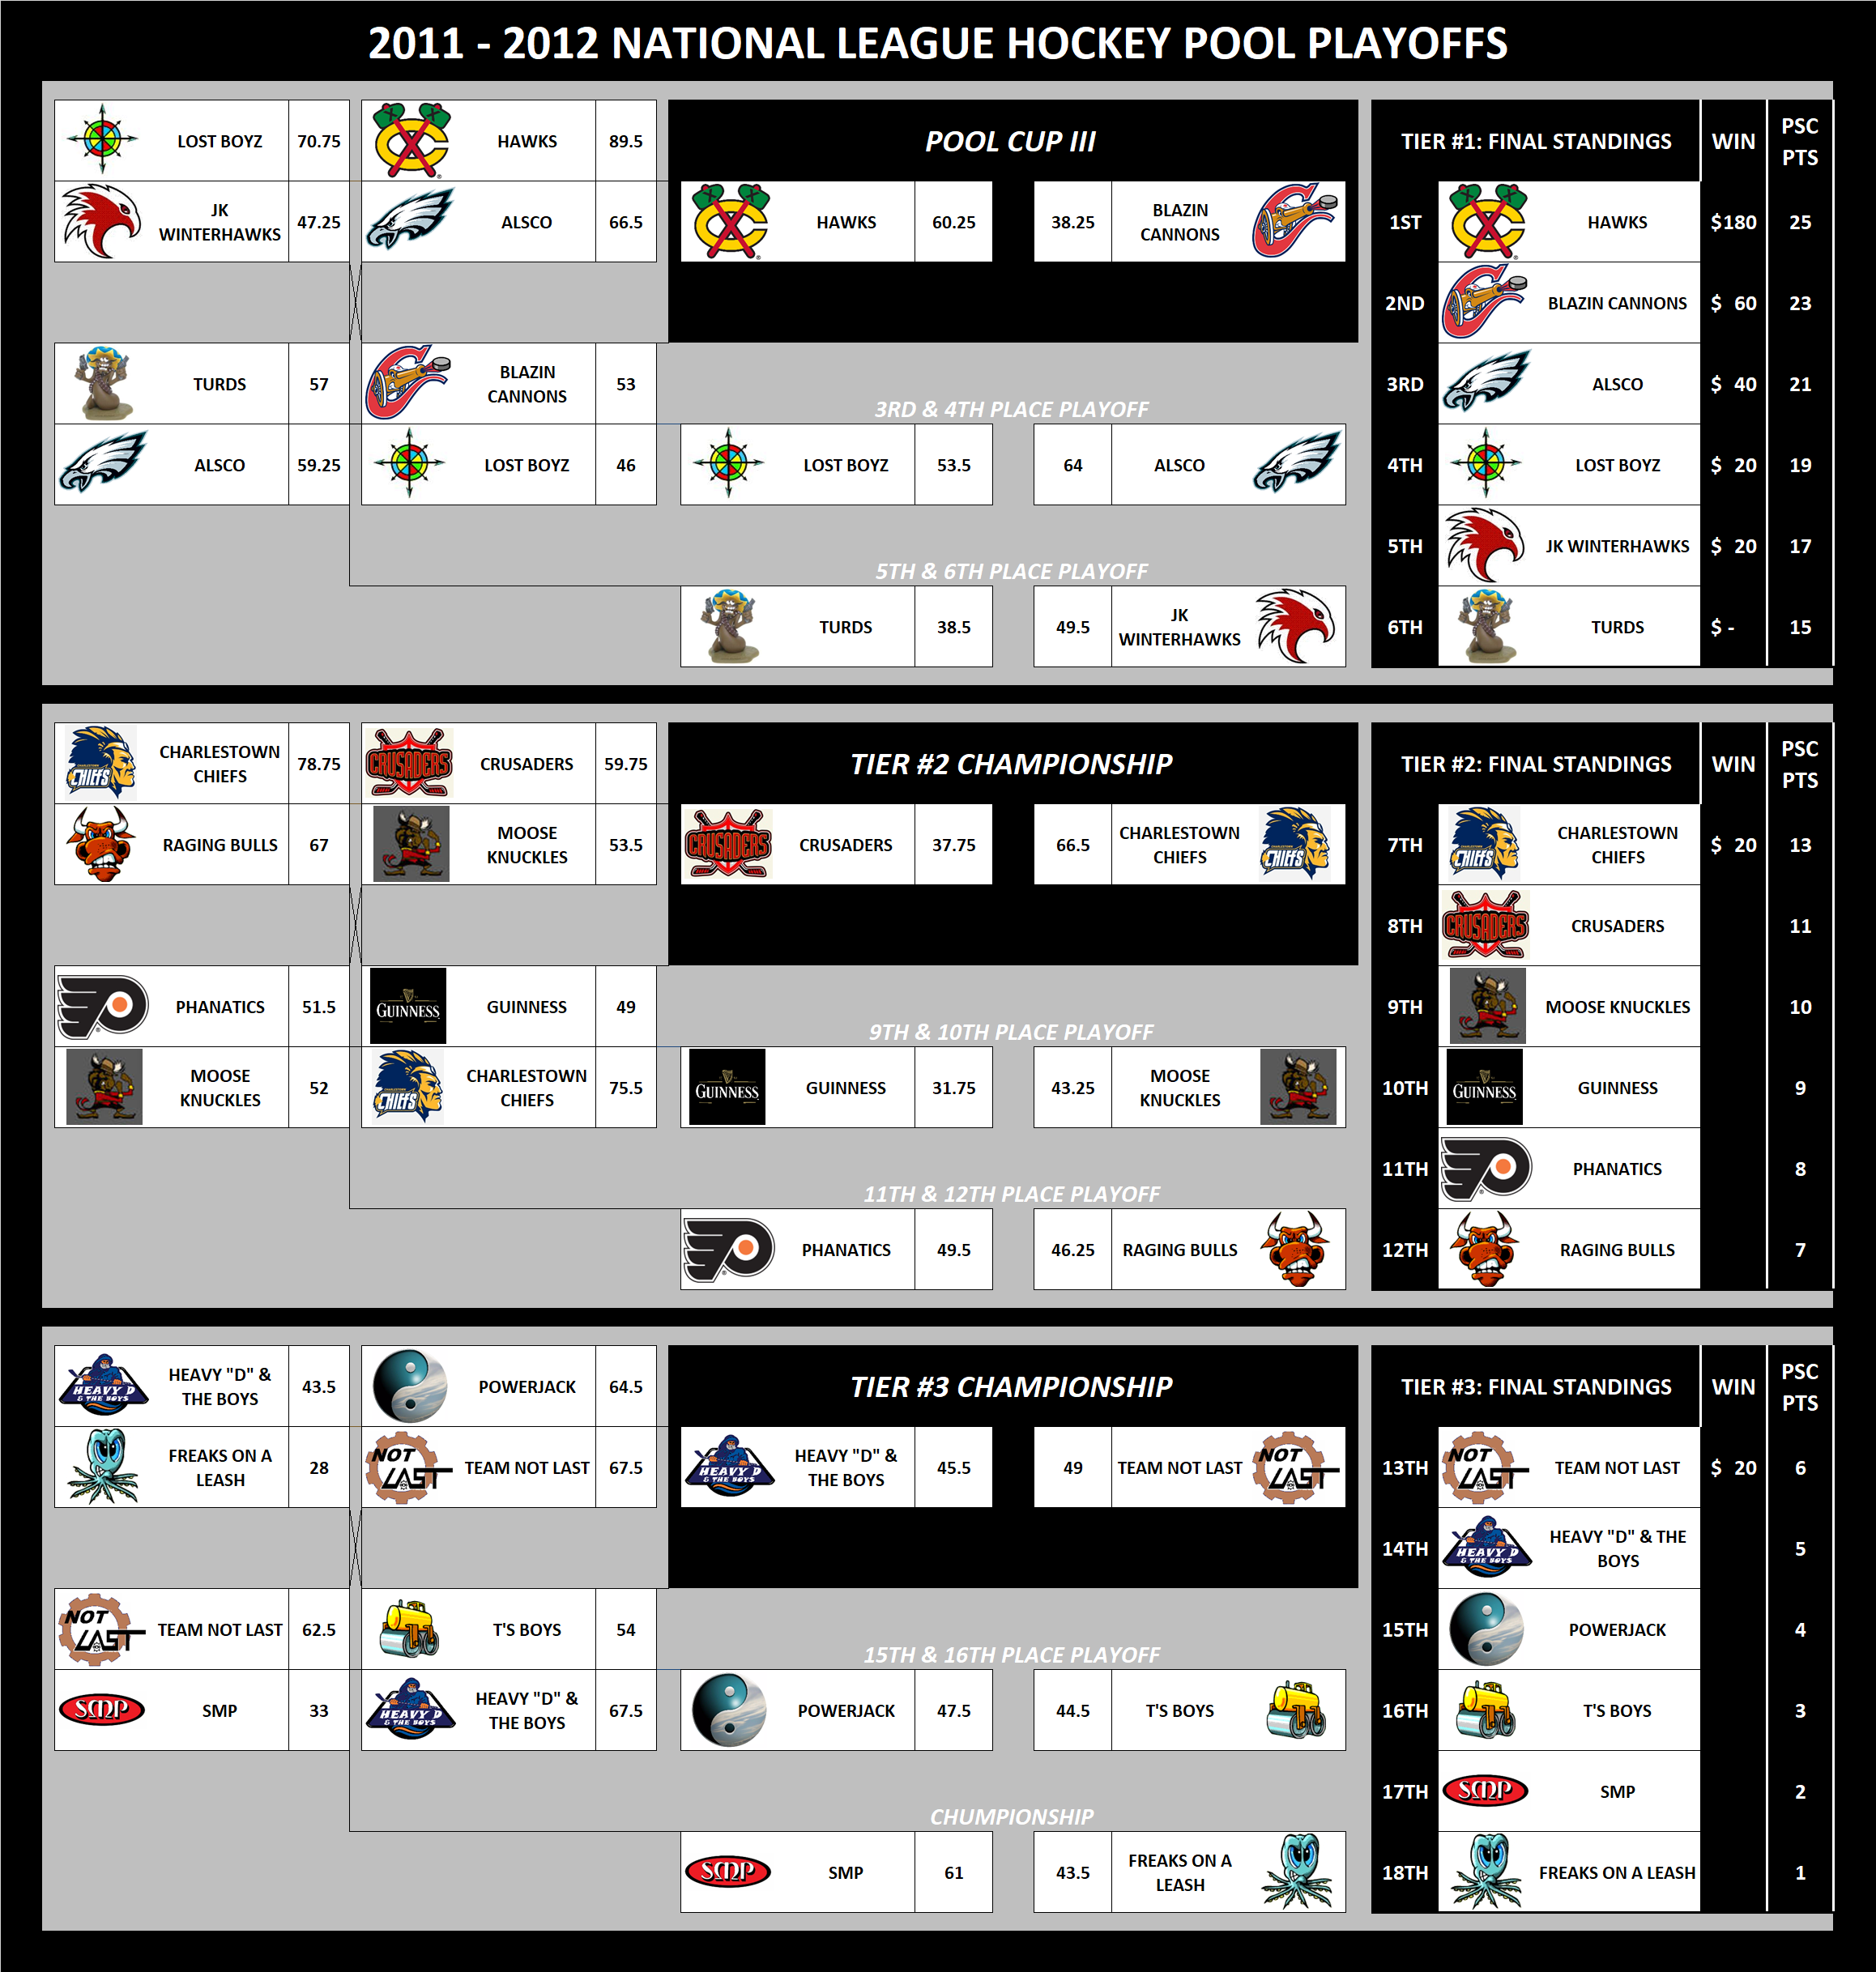 2011-2012 National Hockey League Pool Playoffs